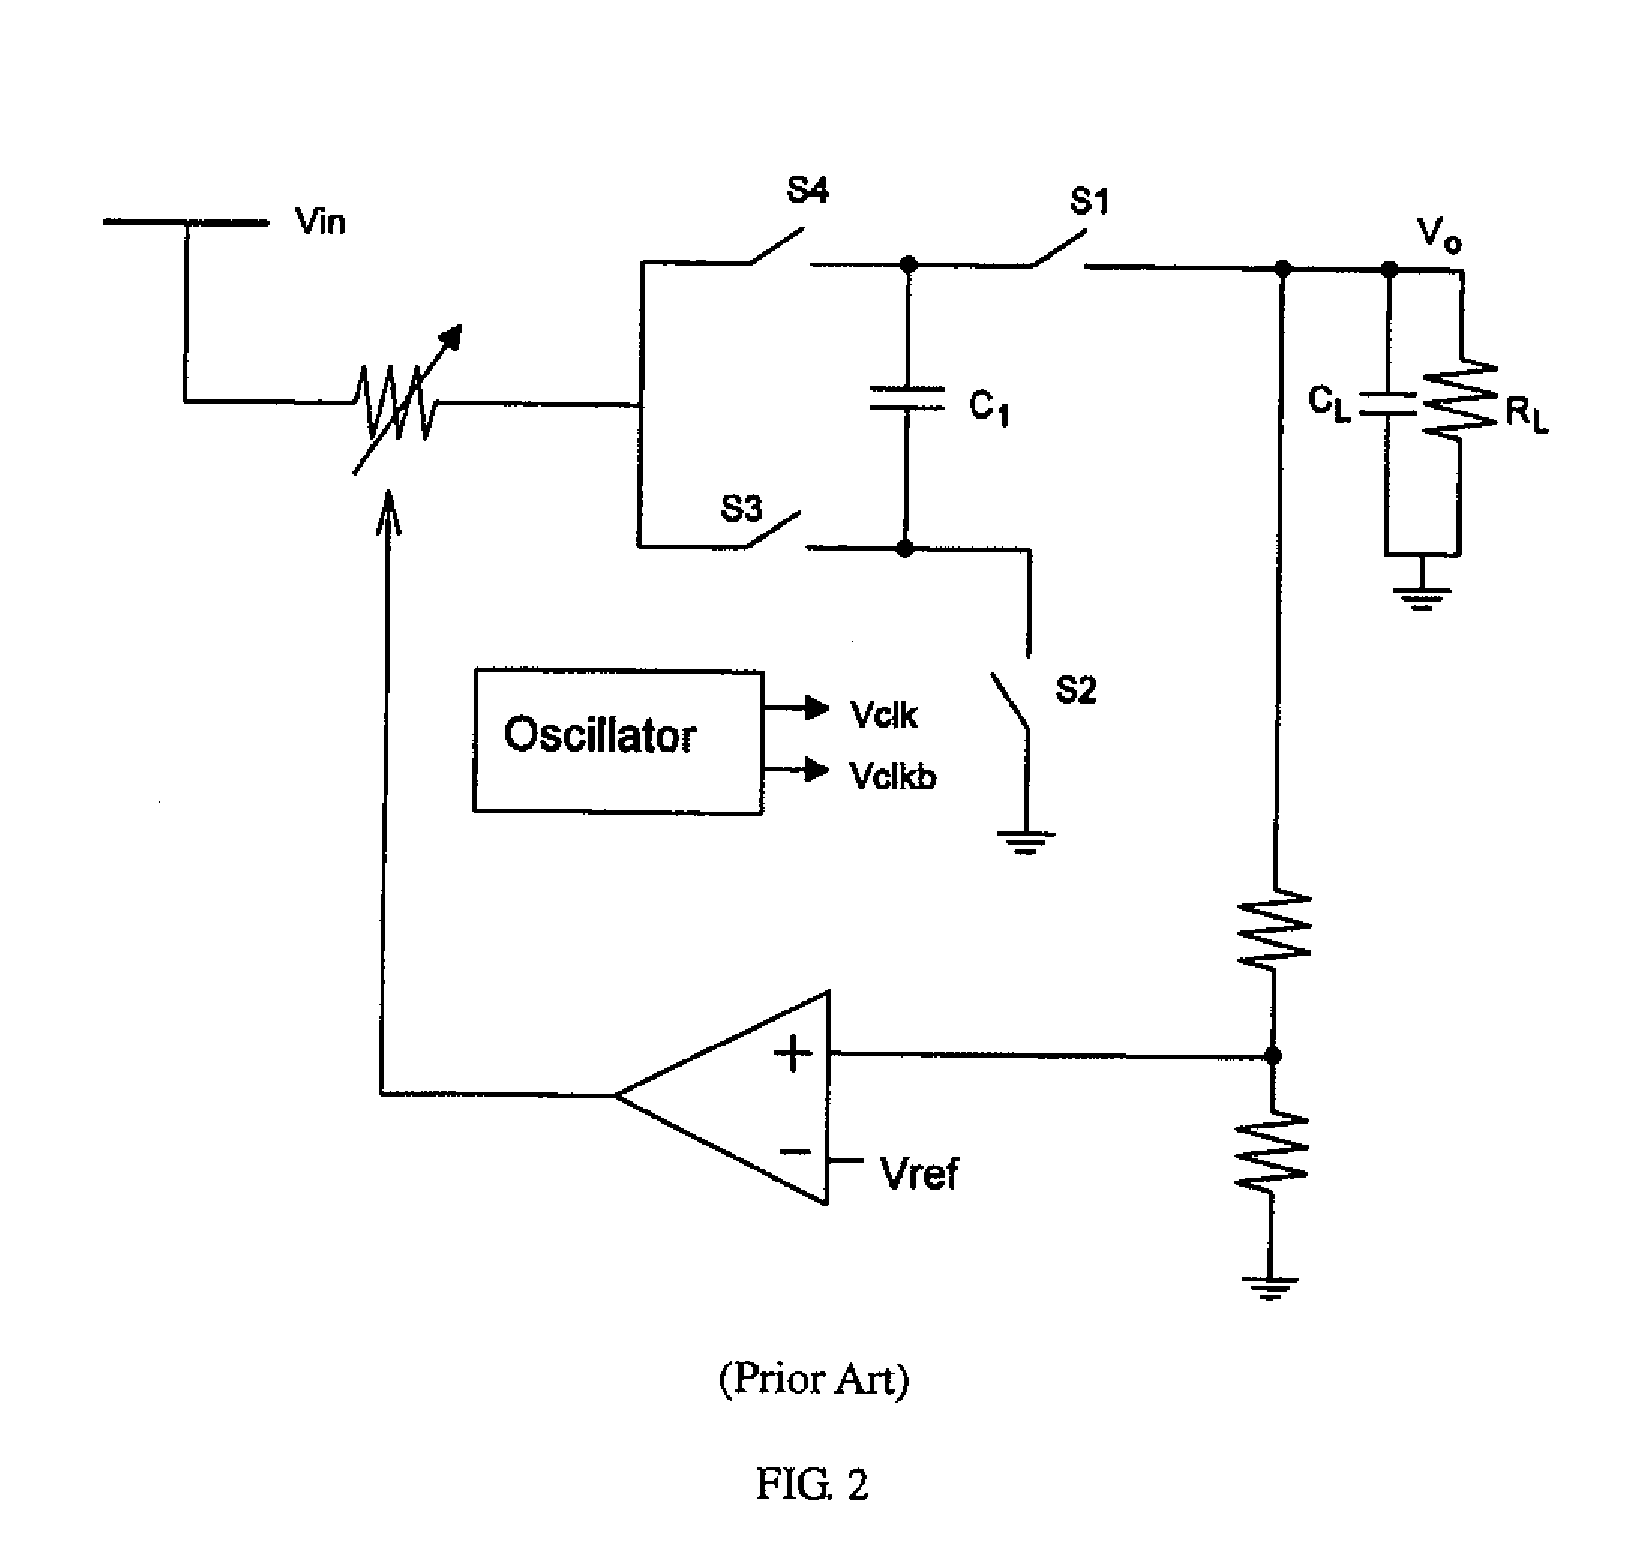 Switched-capacitor regulators